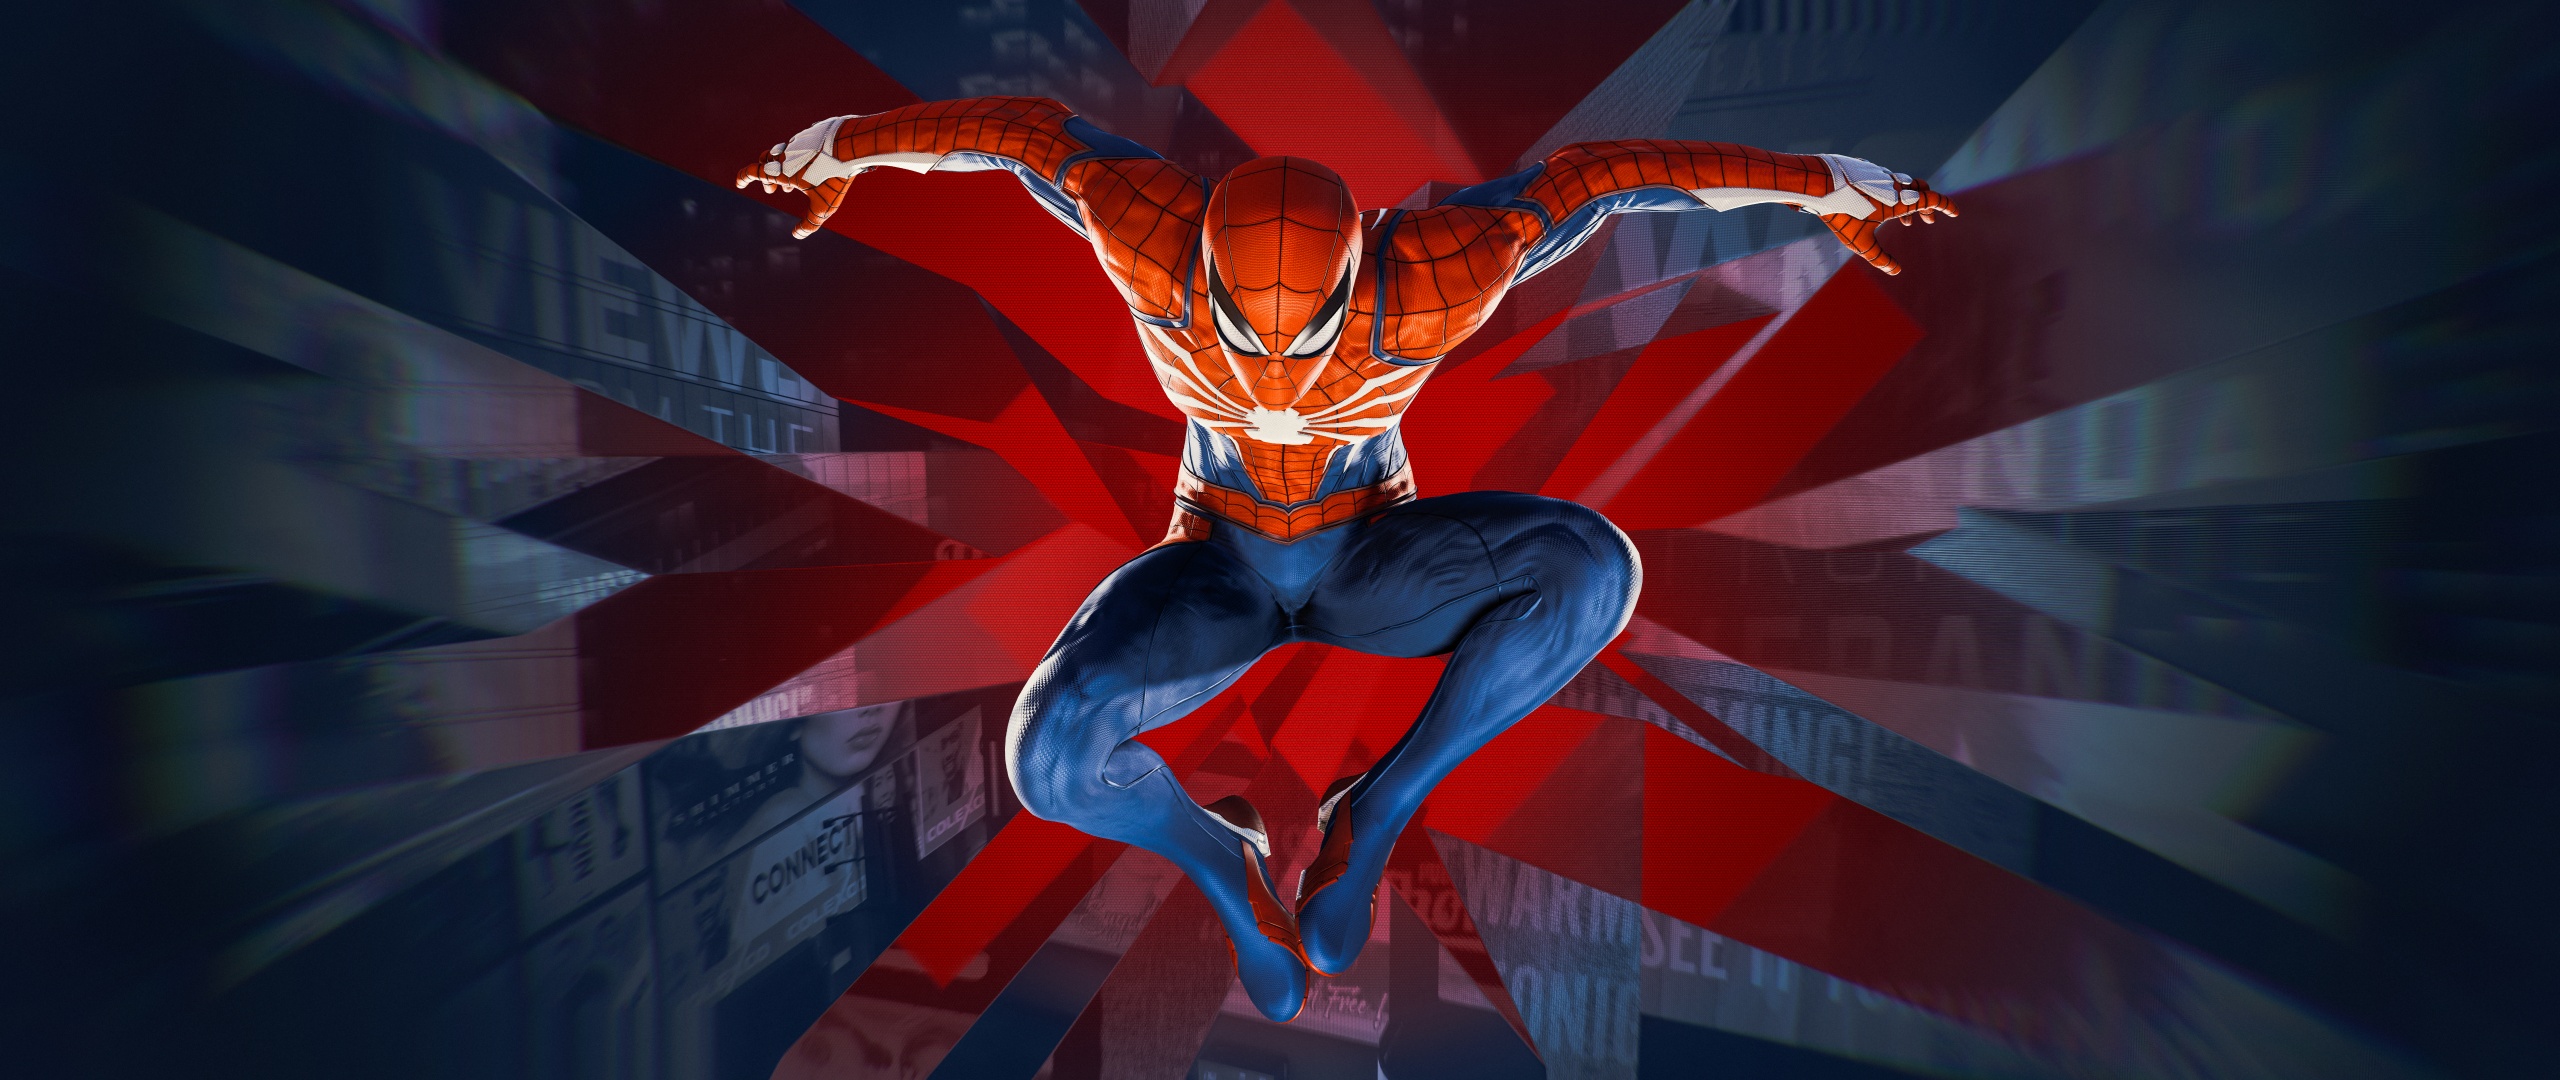 Wallpaper ID 90697  spiderman ps4 spiderman games hd 4k 2018 games  ps games 5k 8k 10k free download